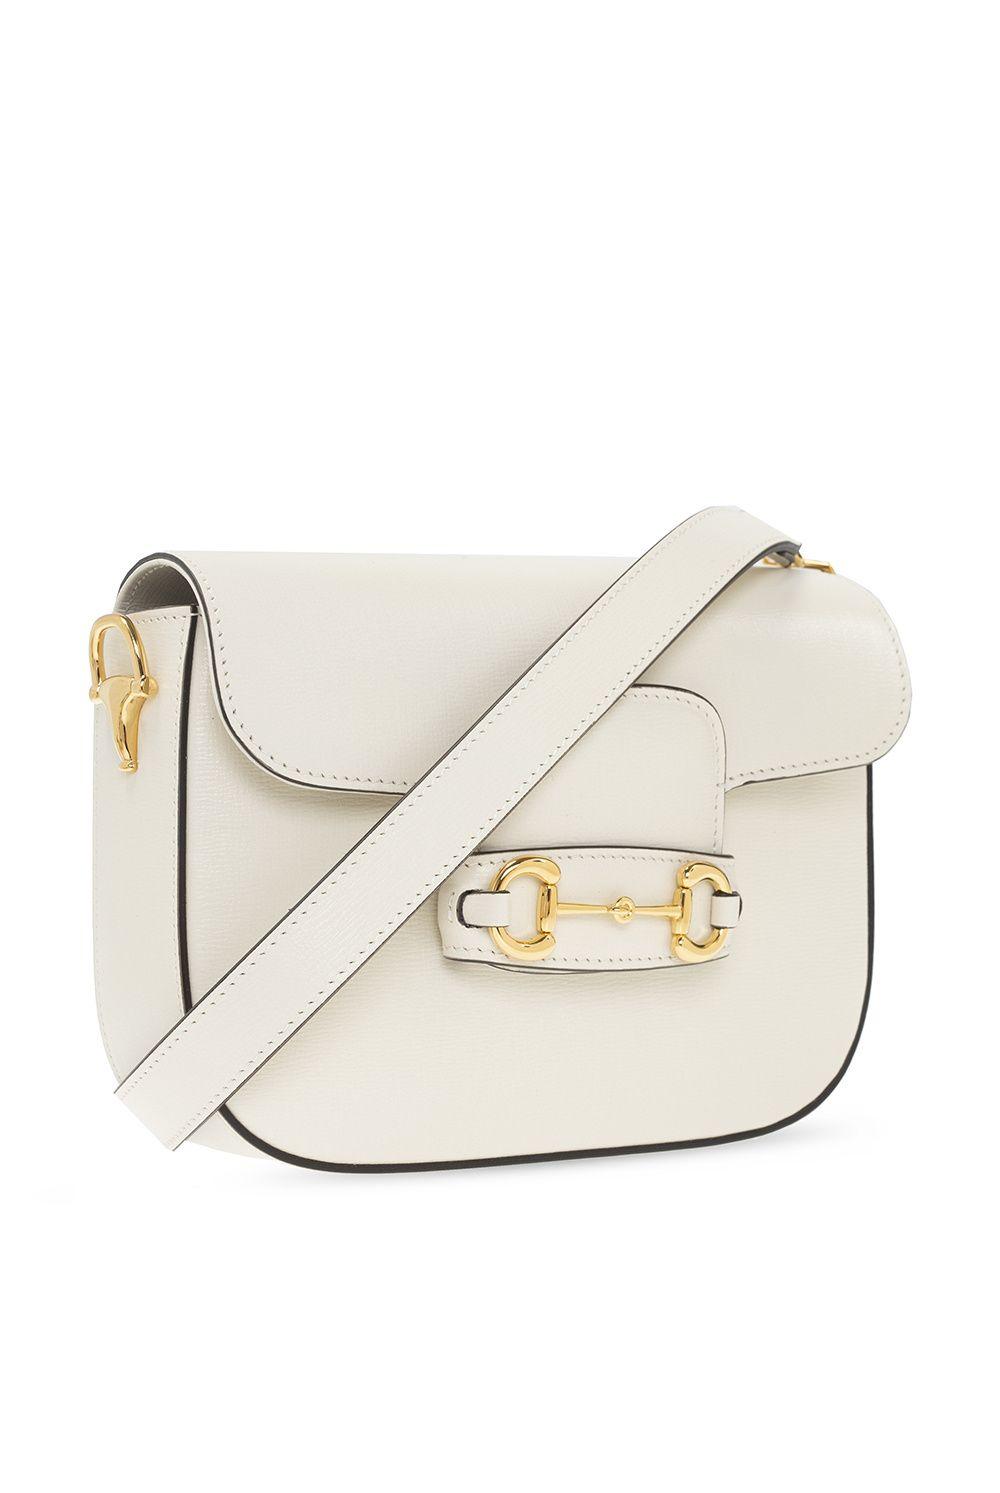 Gucci 'horsebit 1955 Mini' Shoulder Bag in White